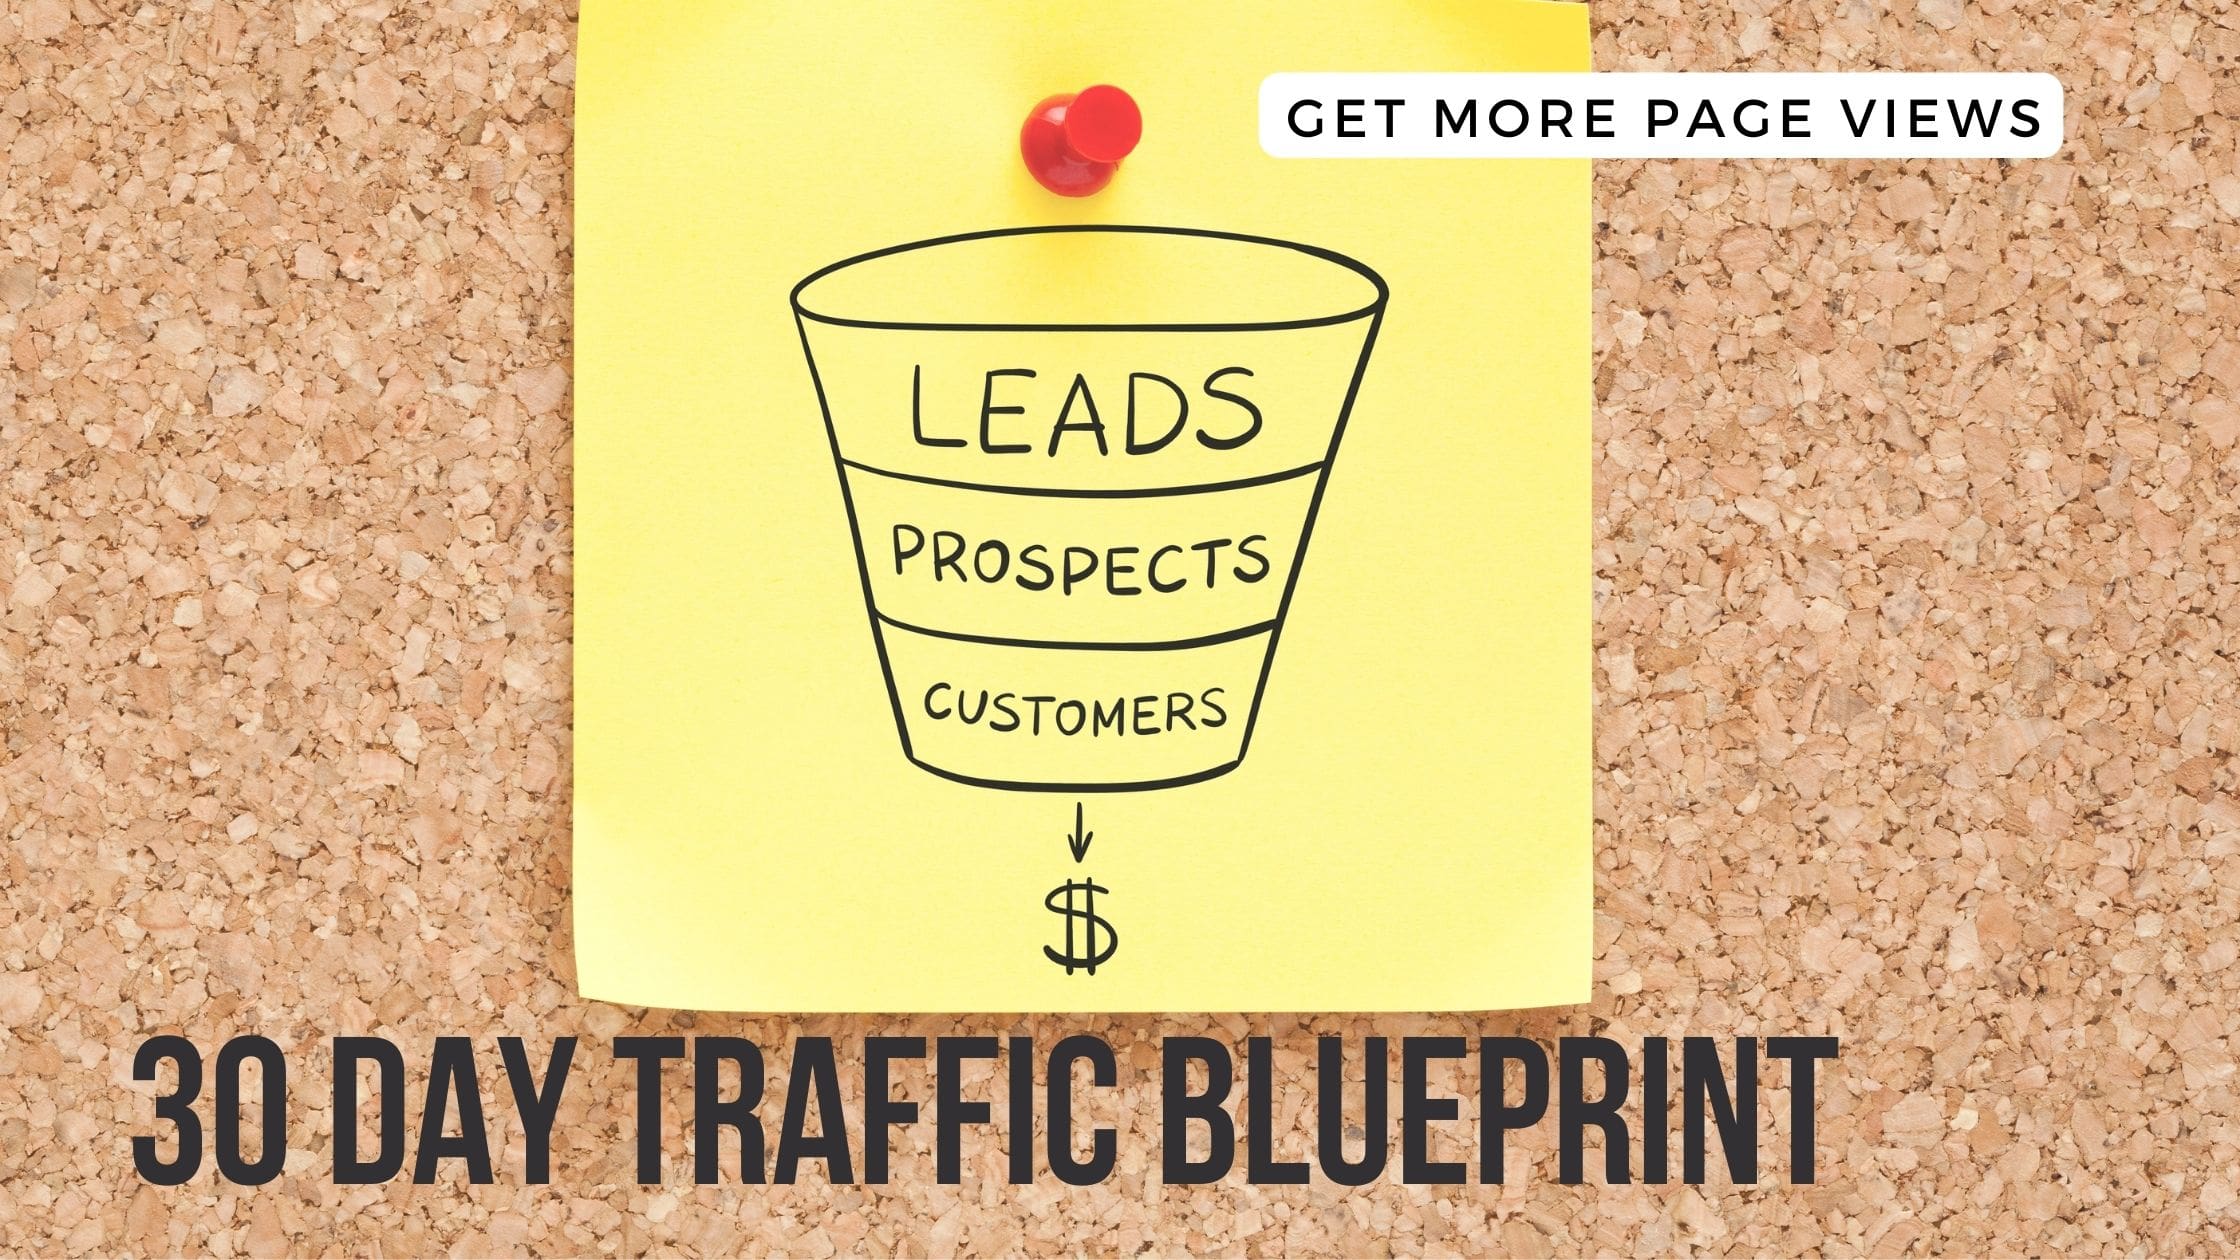 30 Day Traffic Blueprint - Get More Page Views Blog Header